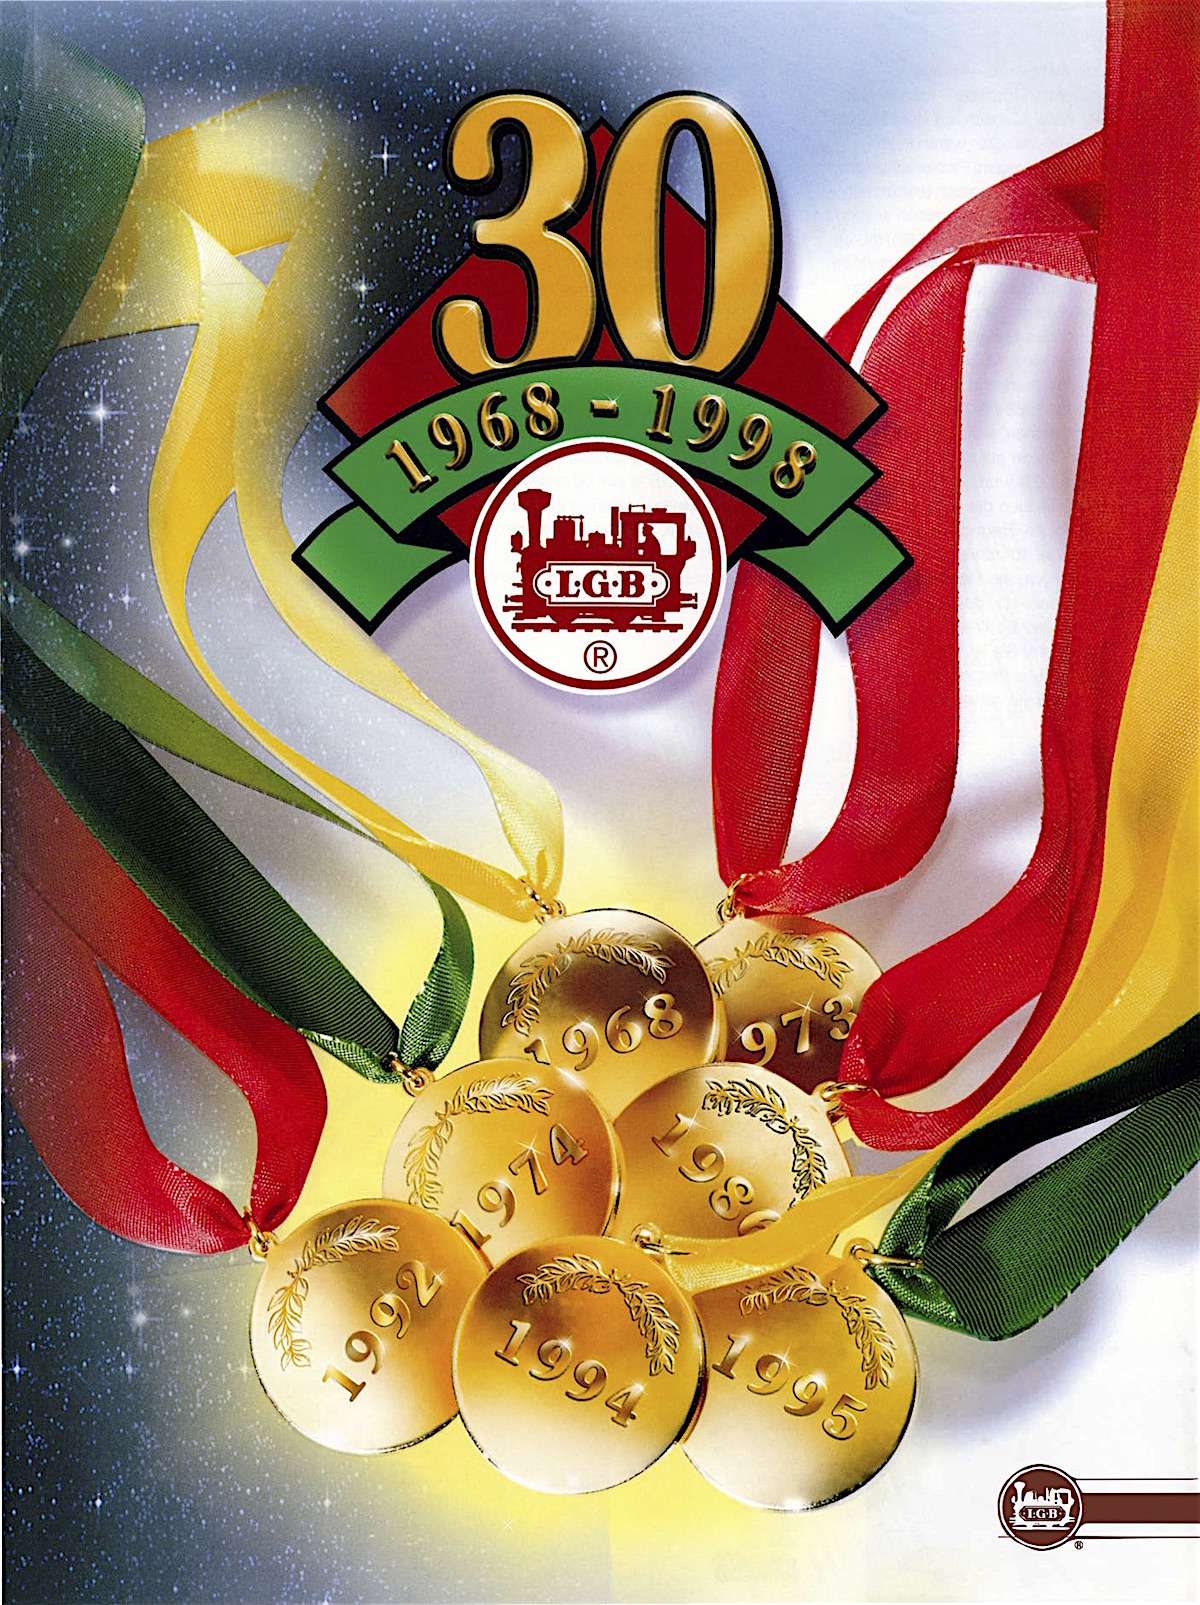 LGB Broschüre (Flyer) 1998 - 30-jähriges Jubiläum (30 years anniversary)